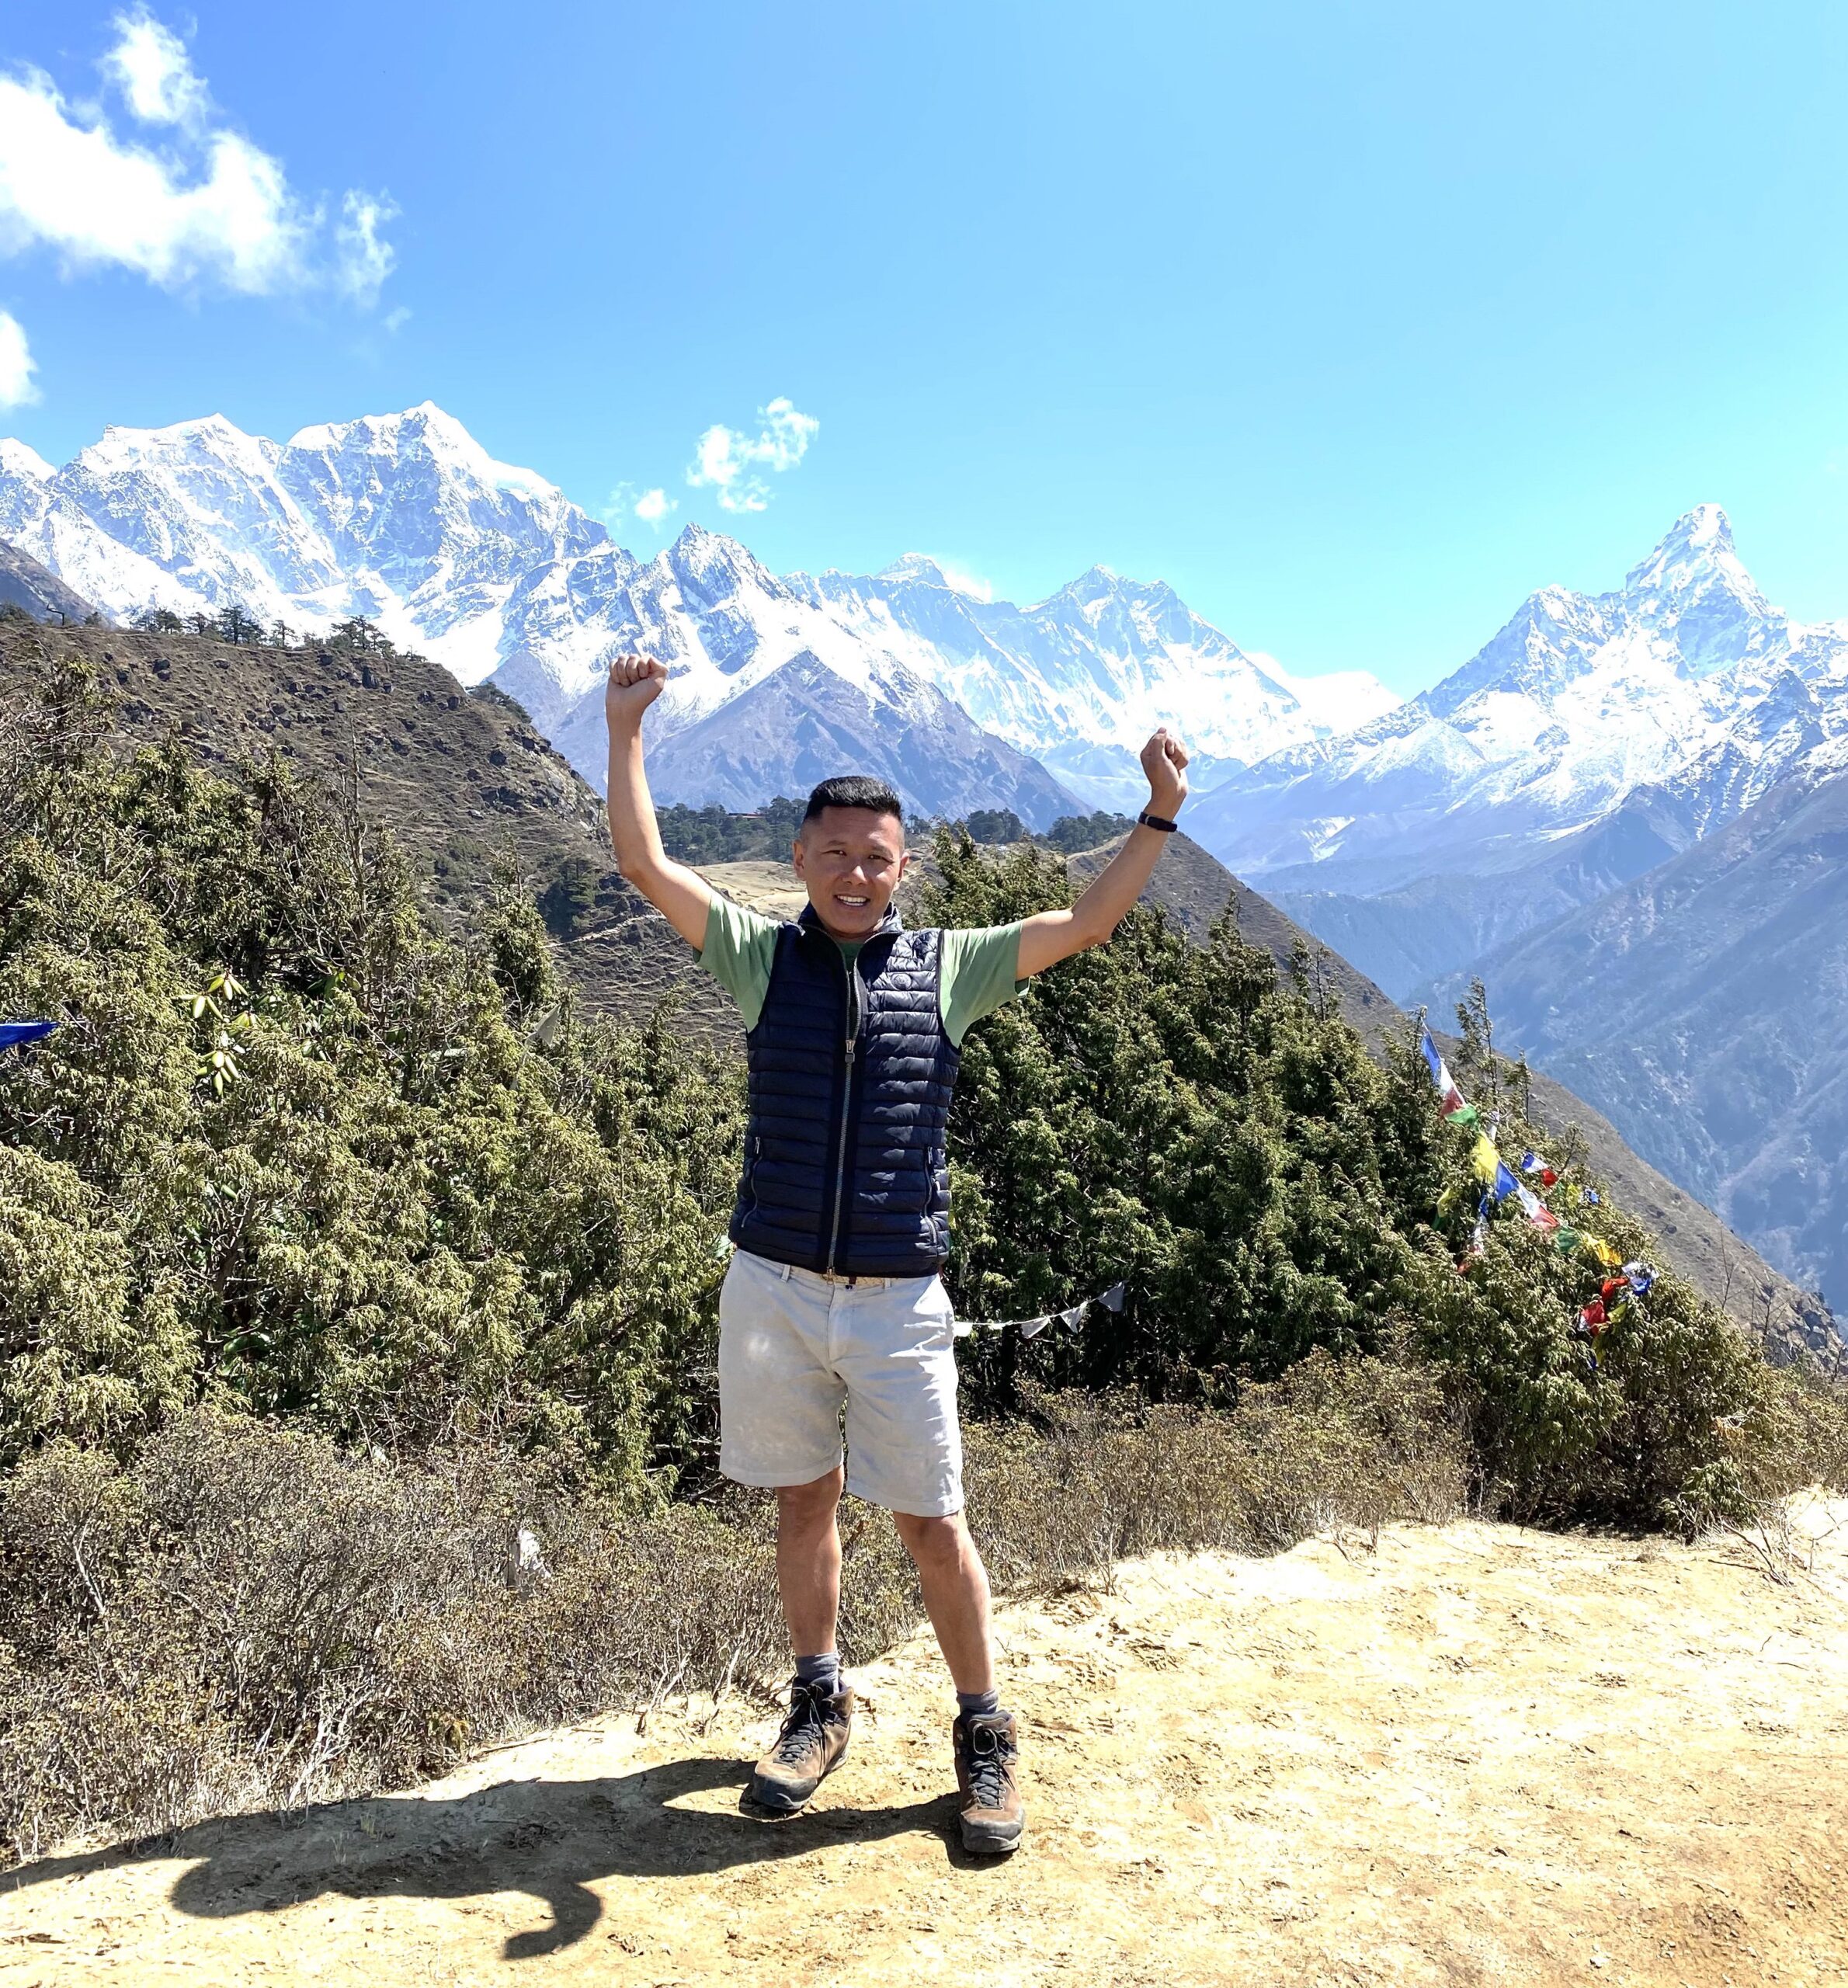 trekking in nepal travel insurance